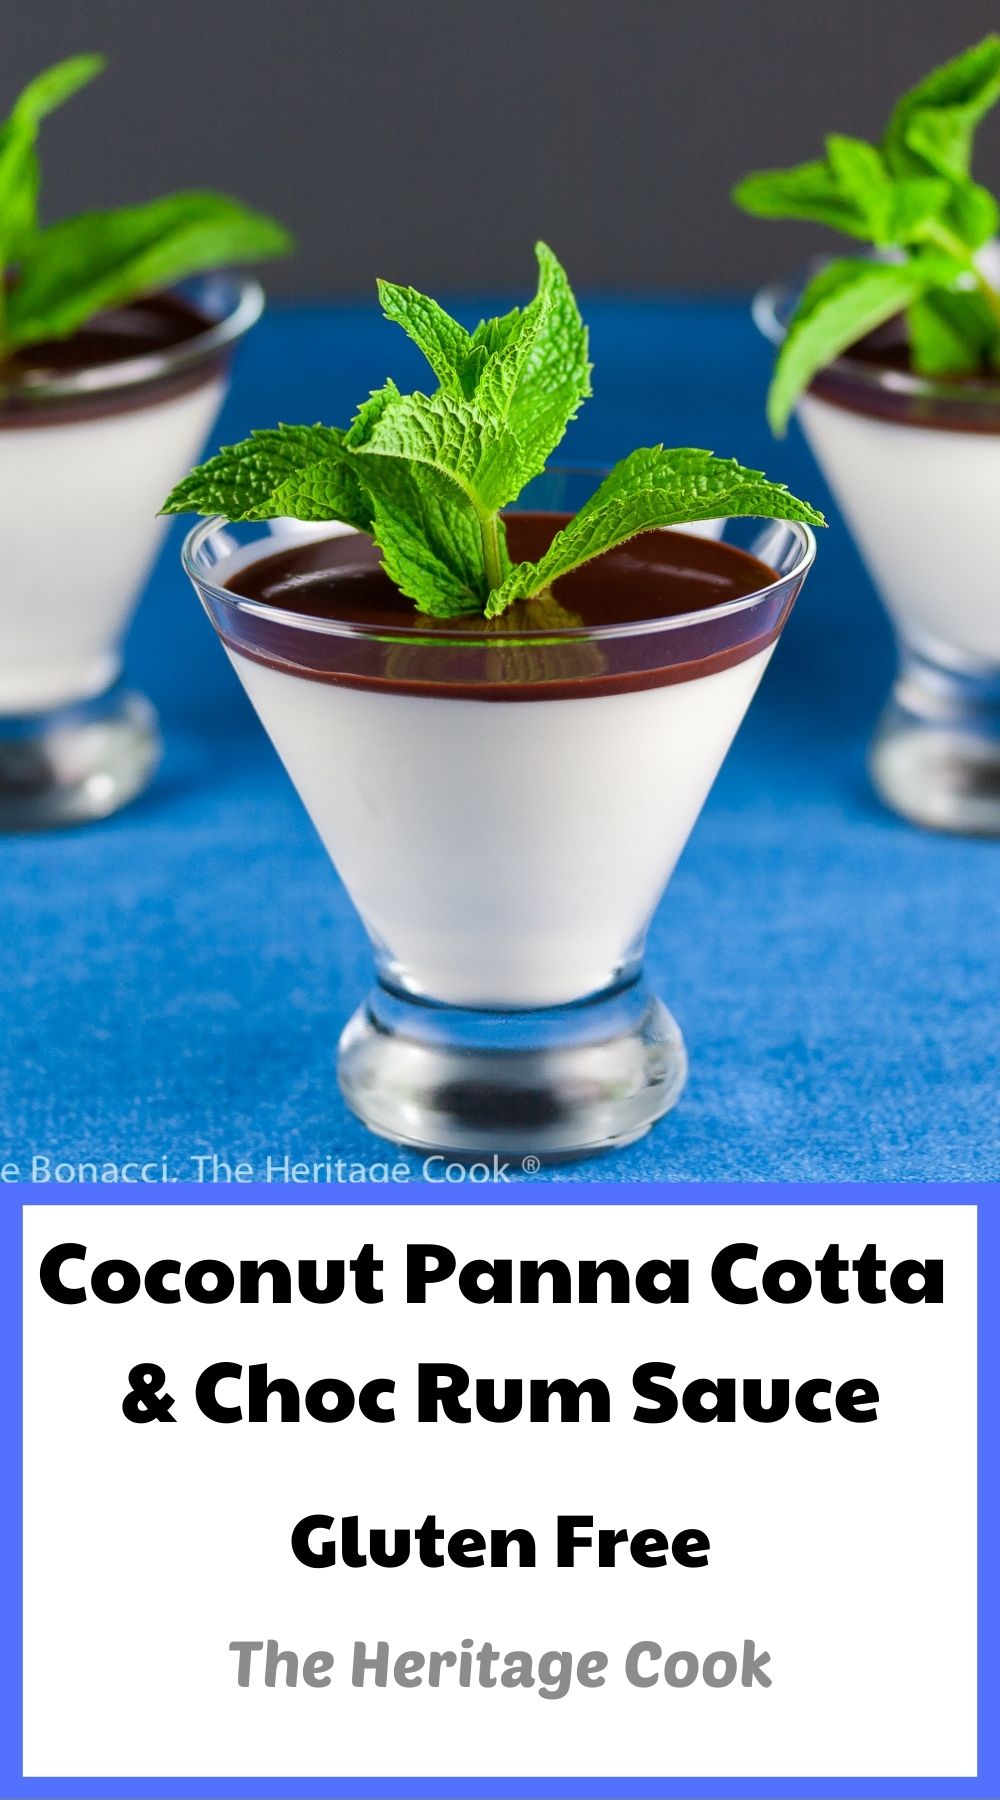 Coconut Panna Cotta with Chocolate-Rum Sauce; 2022 Jane Bonacci, The Heritage Cook